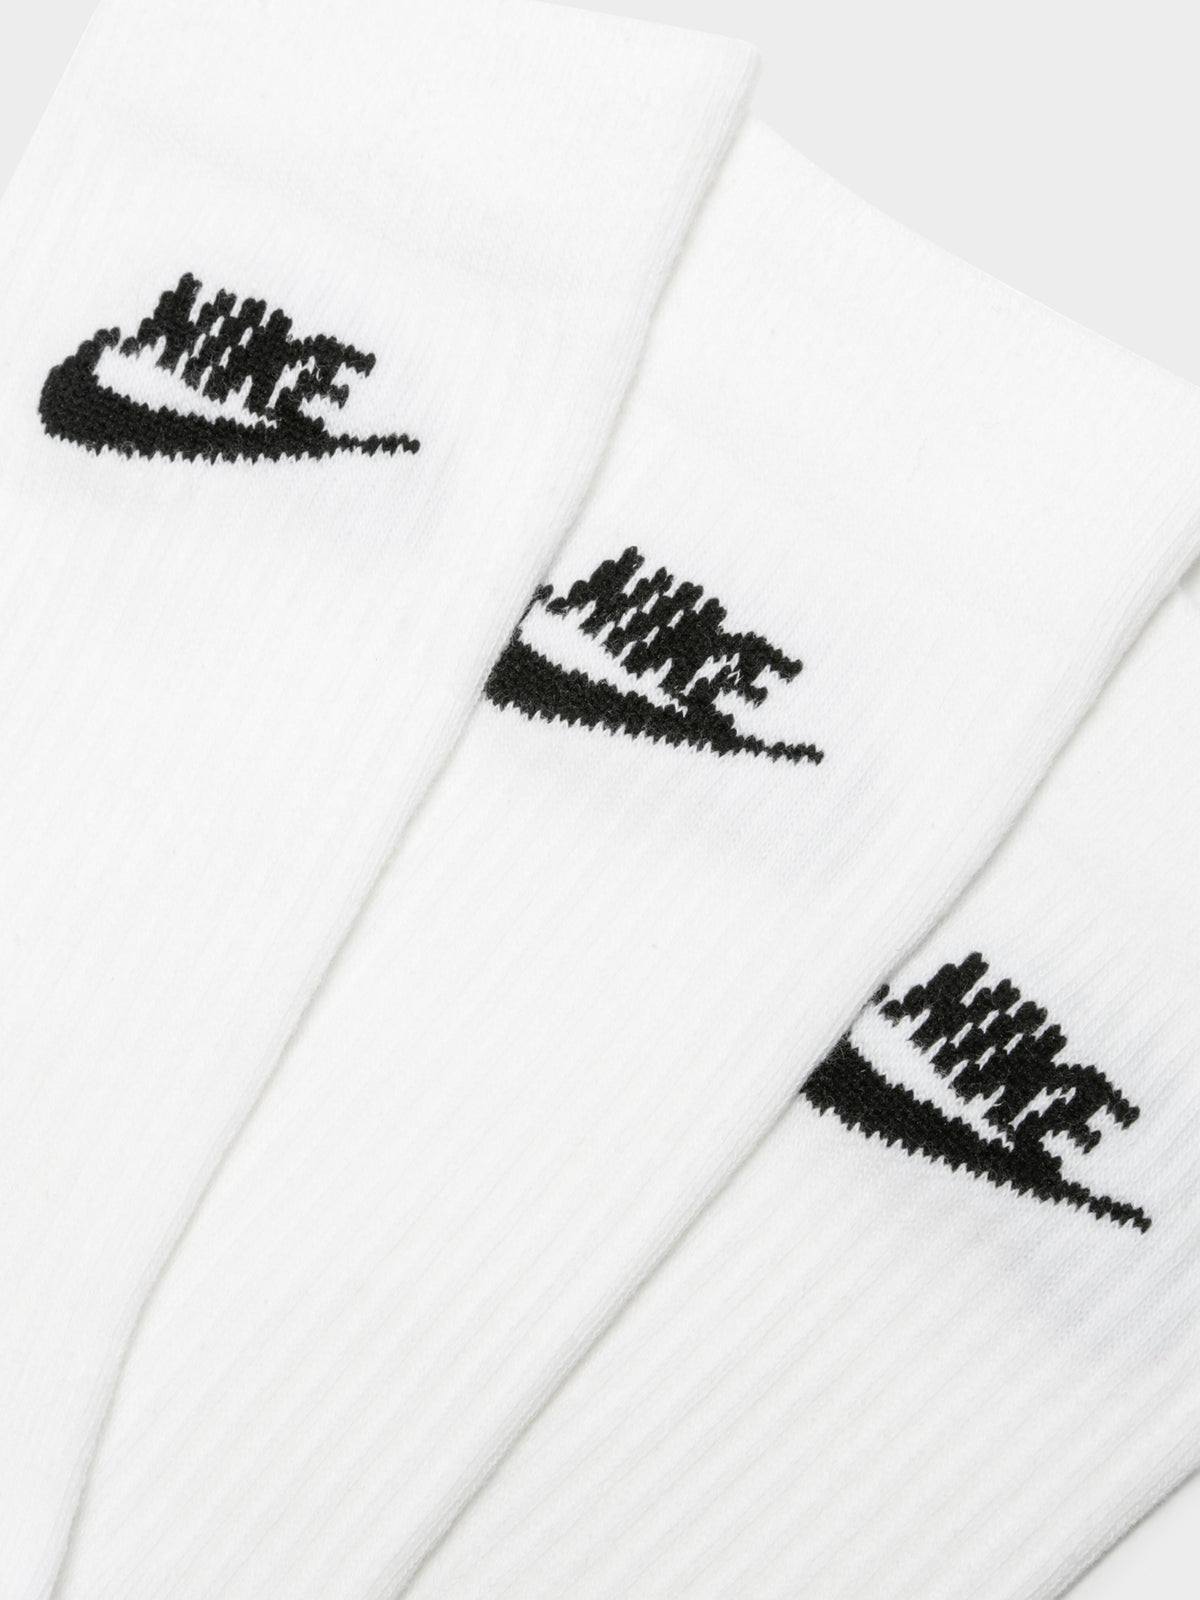 3 Pairs of Everyday Essential Crew Socks in White &amp; Black